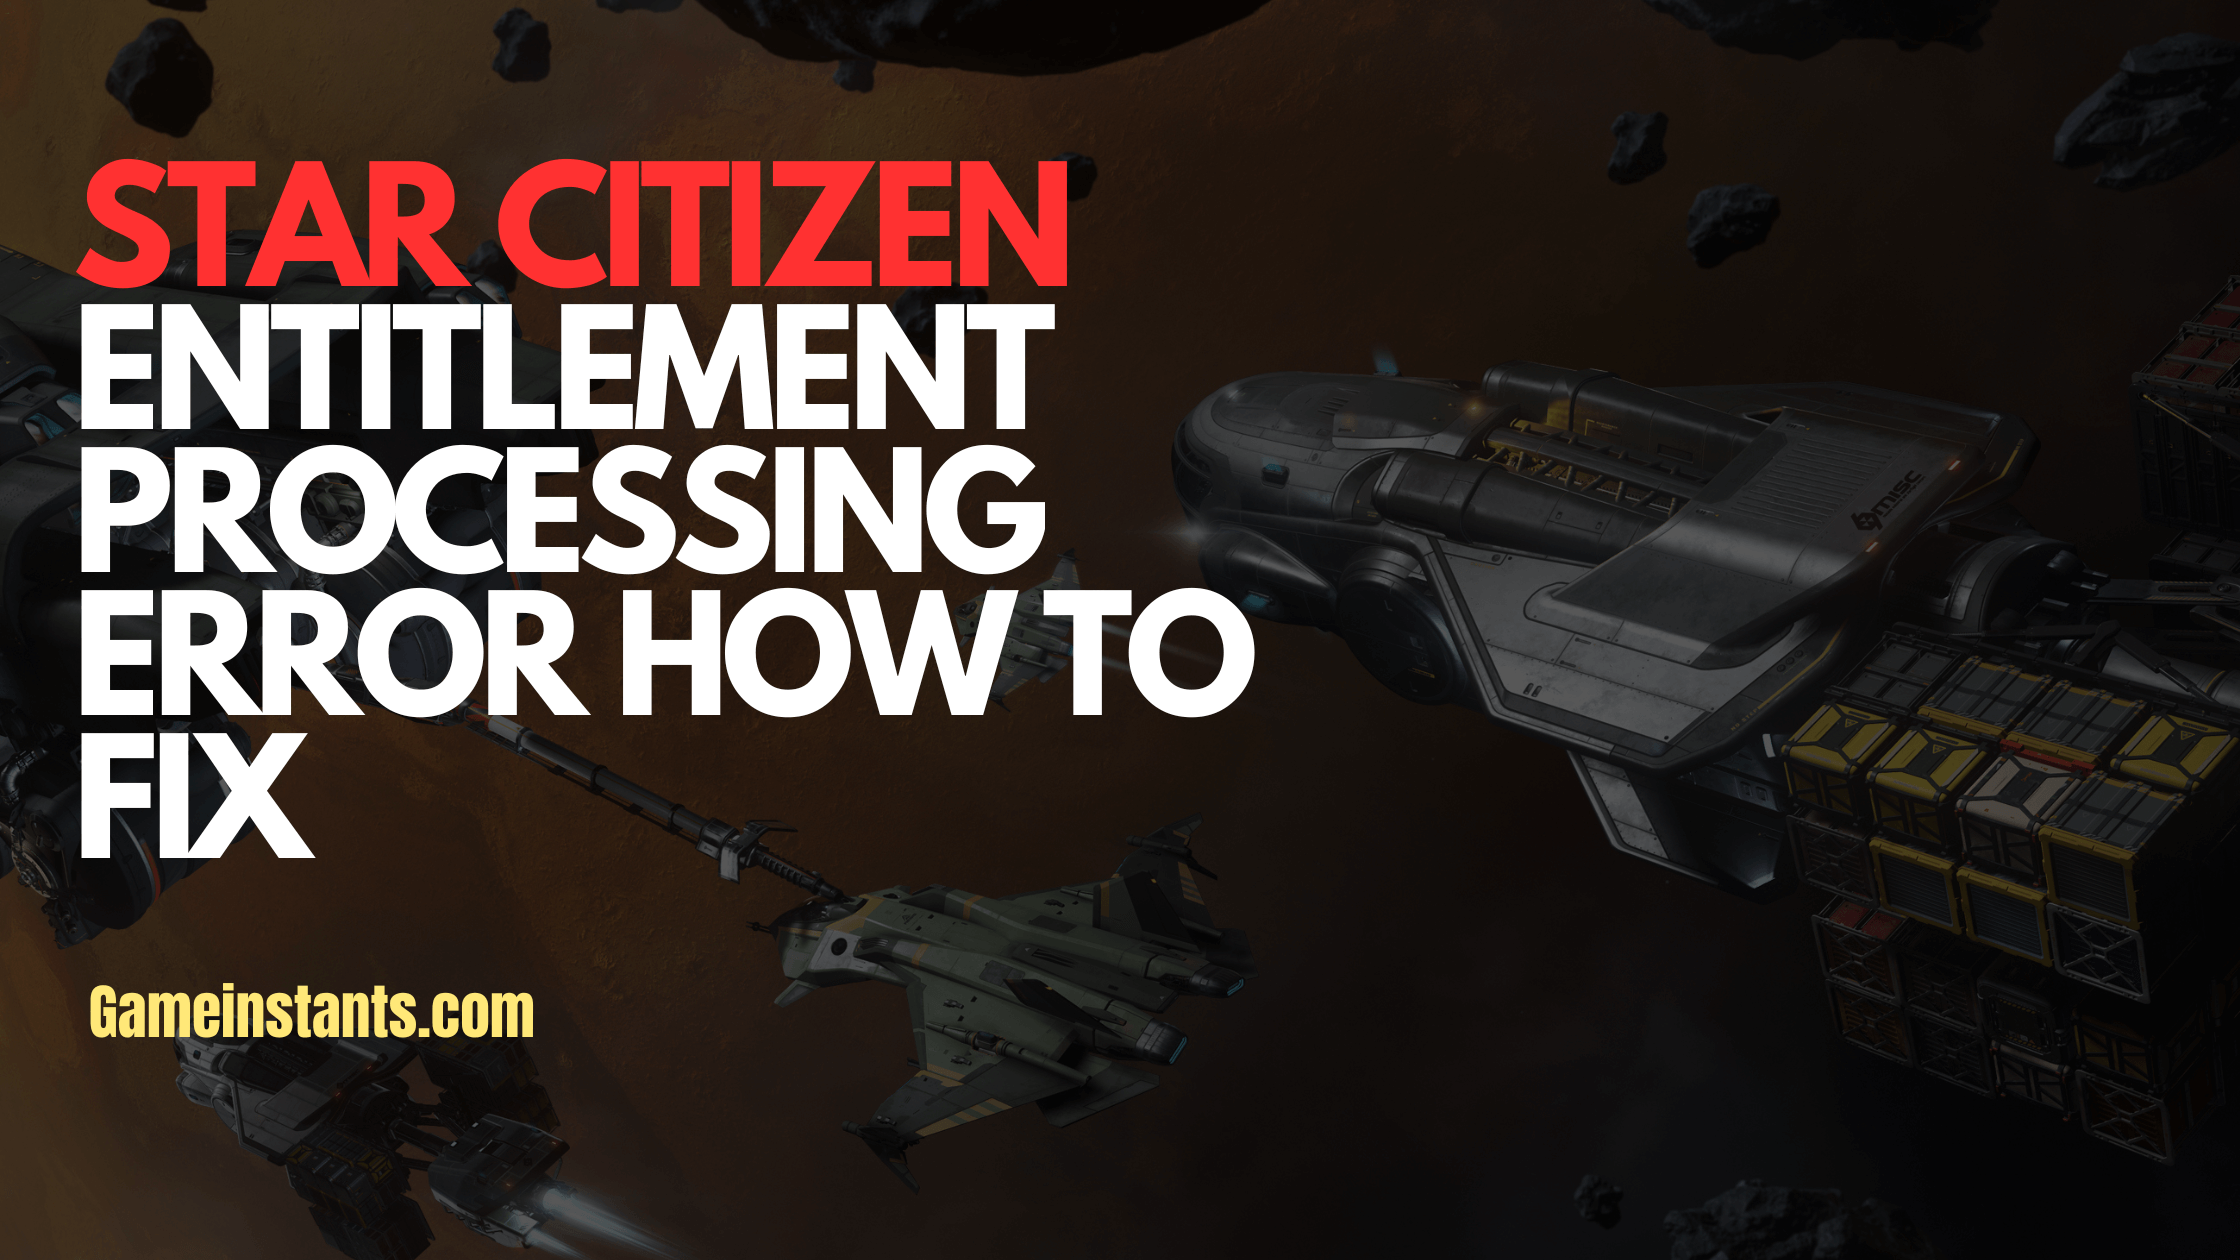 Star Citizen Entitlement Processing Error